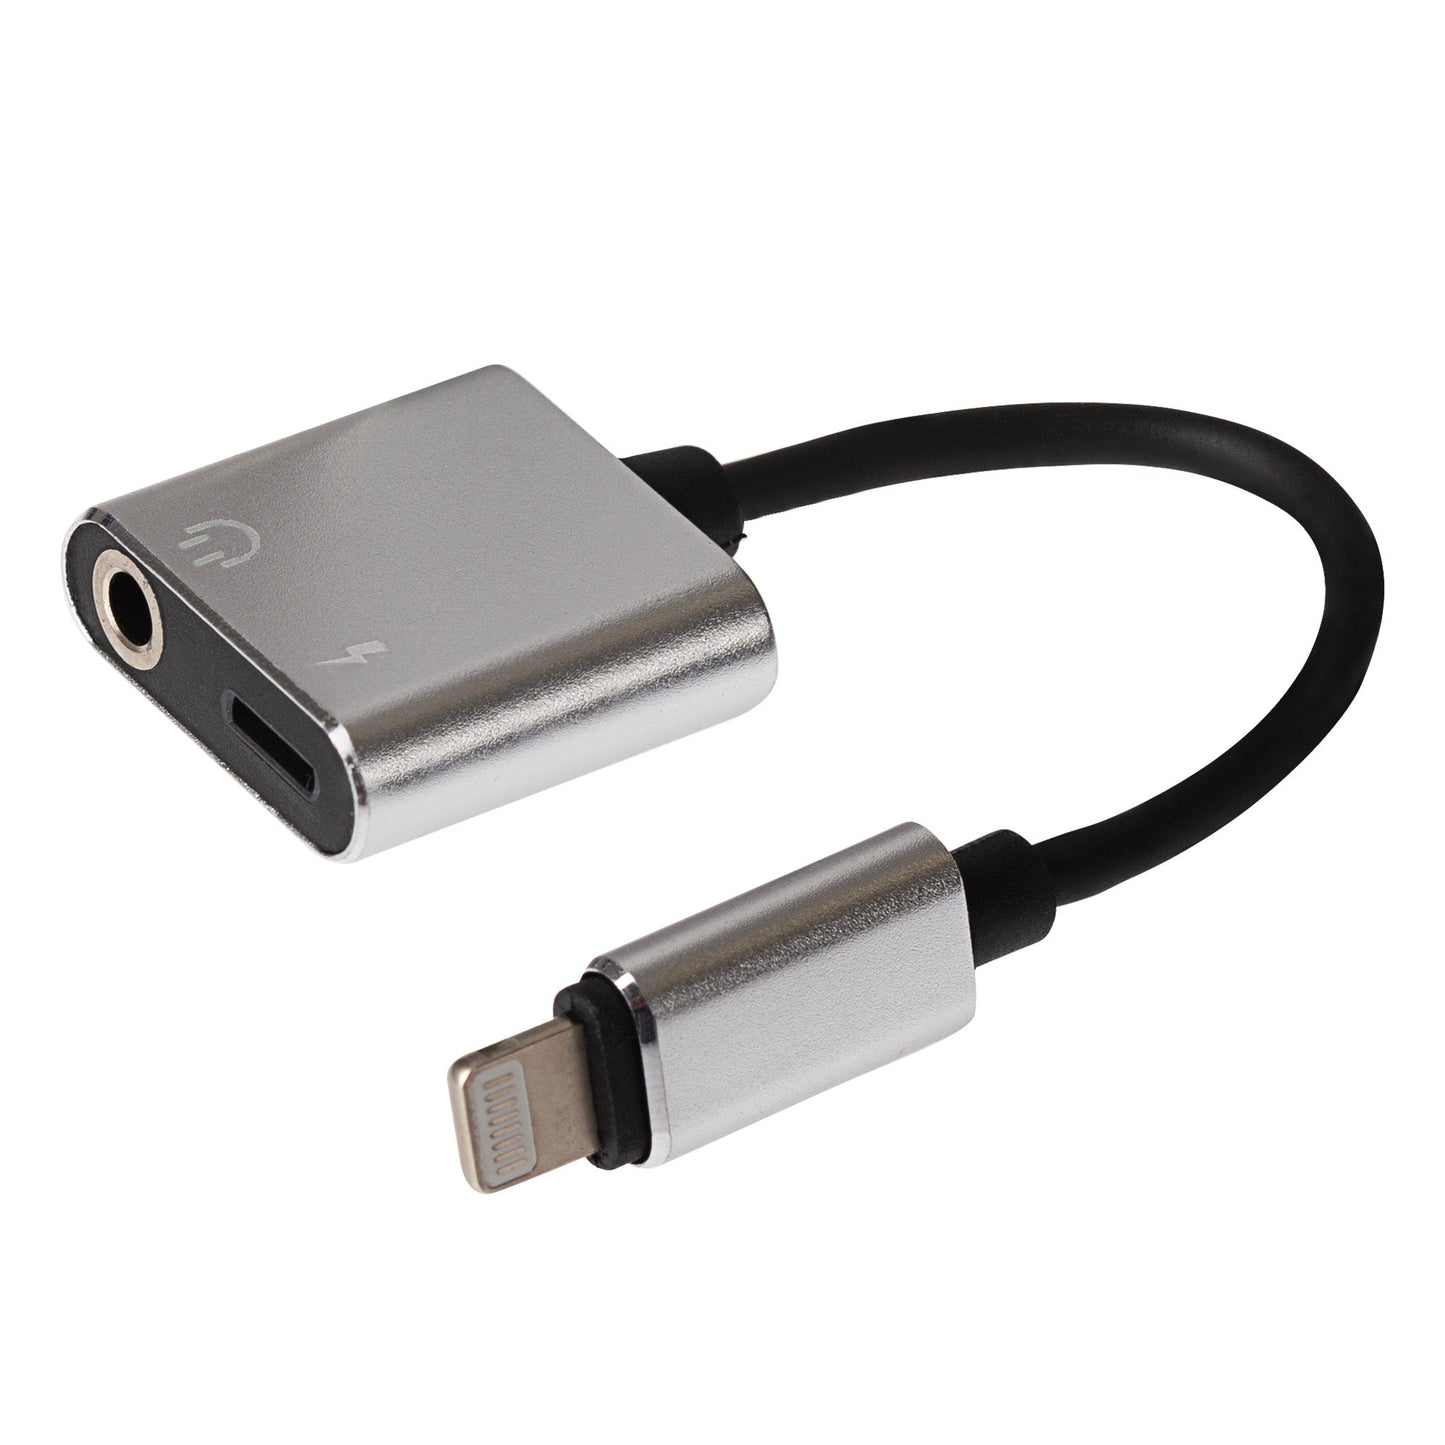 Maplin Lightning to 3.5mm Headphone Audio Jack / Lightning Charging Port Adapter - White, 10cm - maplin.co.uk